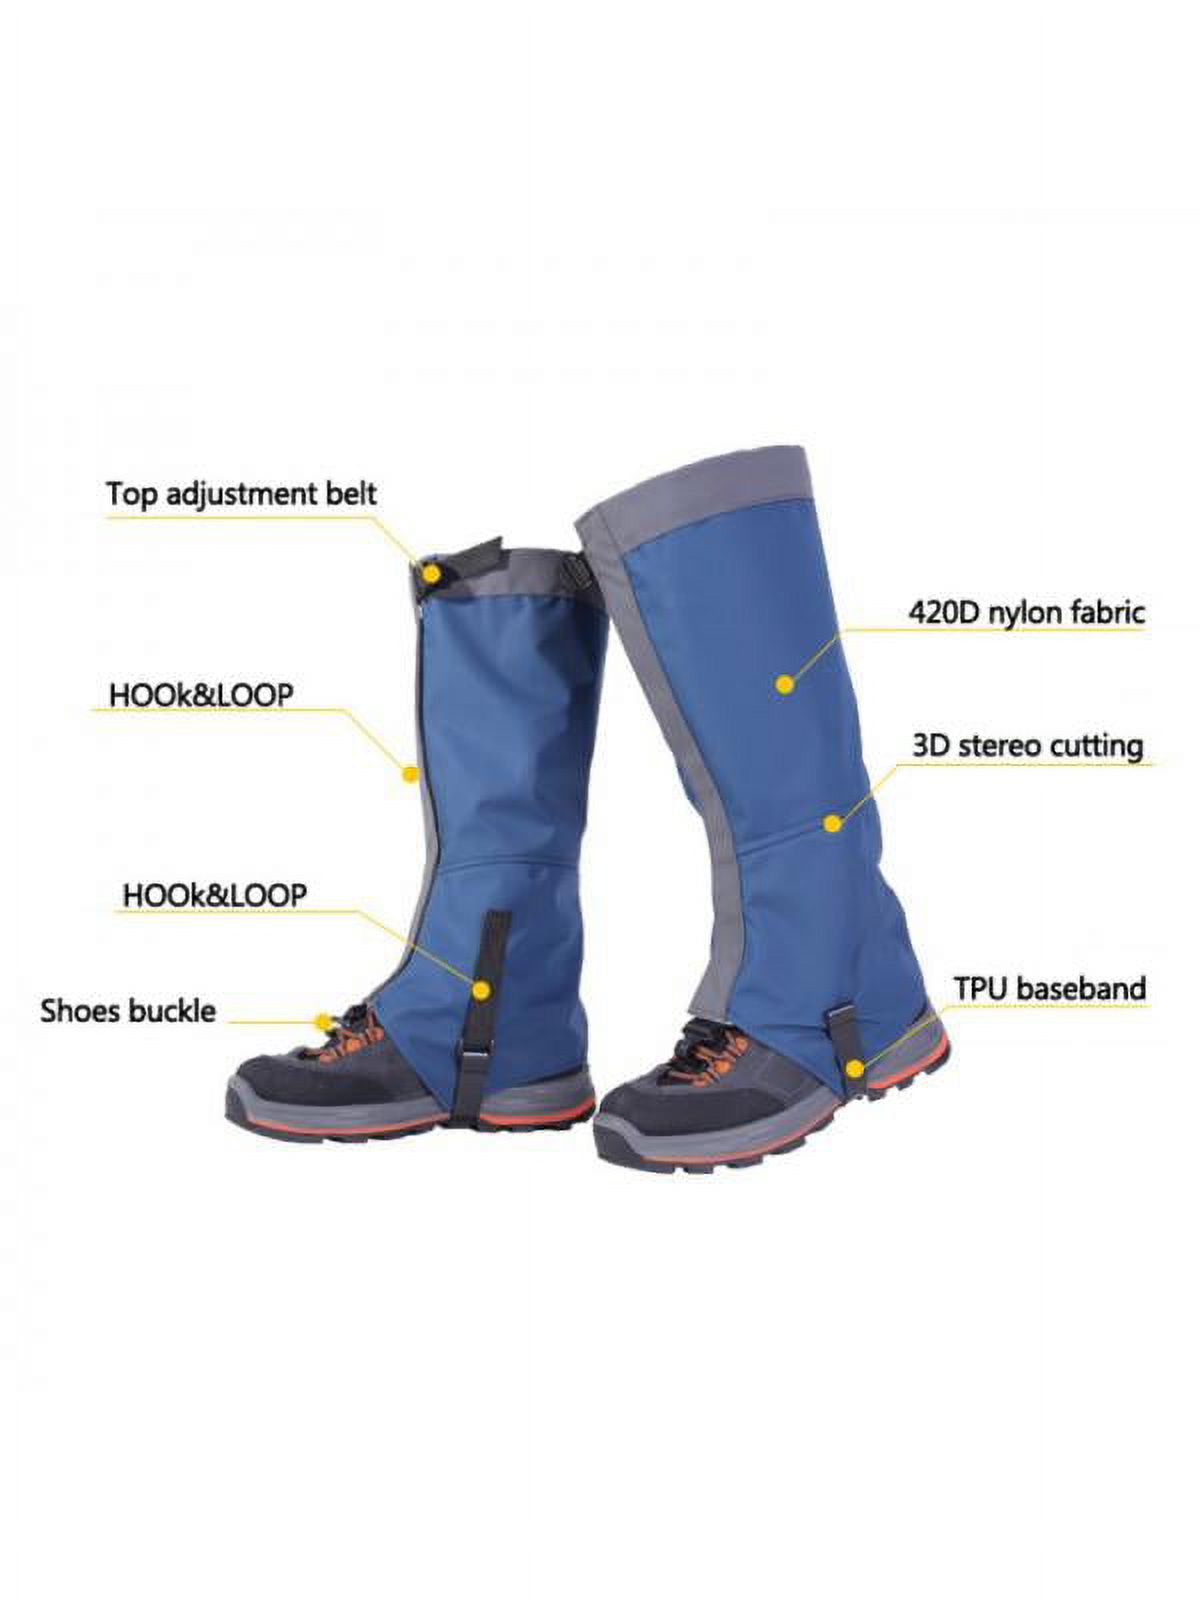 MarinaVida Mountain Hiking Hunting Boot Gaiters Waterproof Snow Snake High Leg Shoes Cover - image 3 of 5